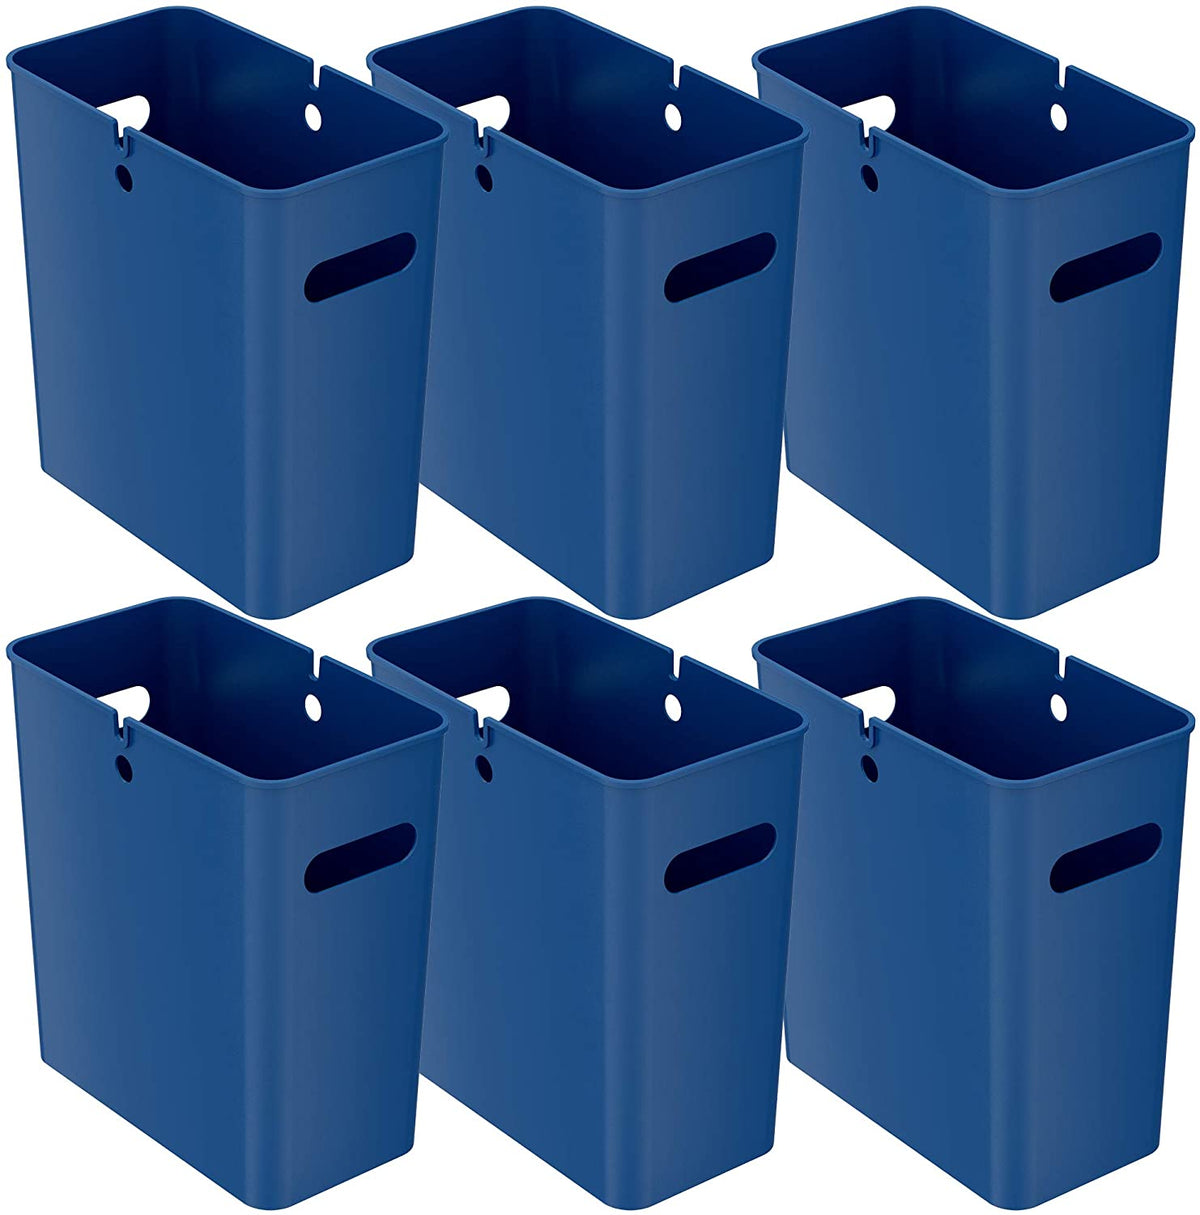 4.2 Gallon / 16 Liter SlimGiant Blue Wastebasket (6-Pack)